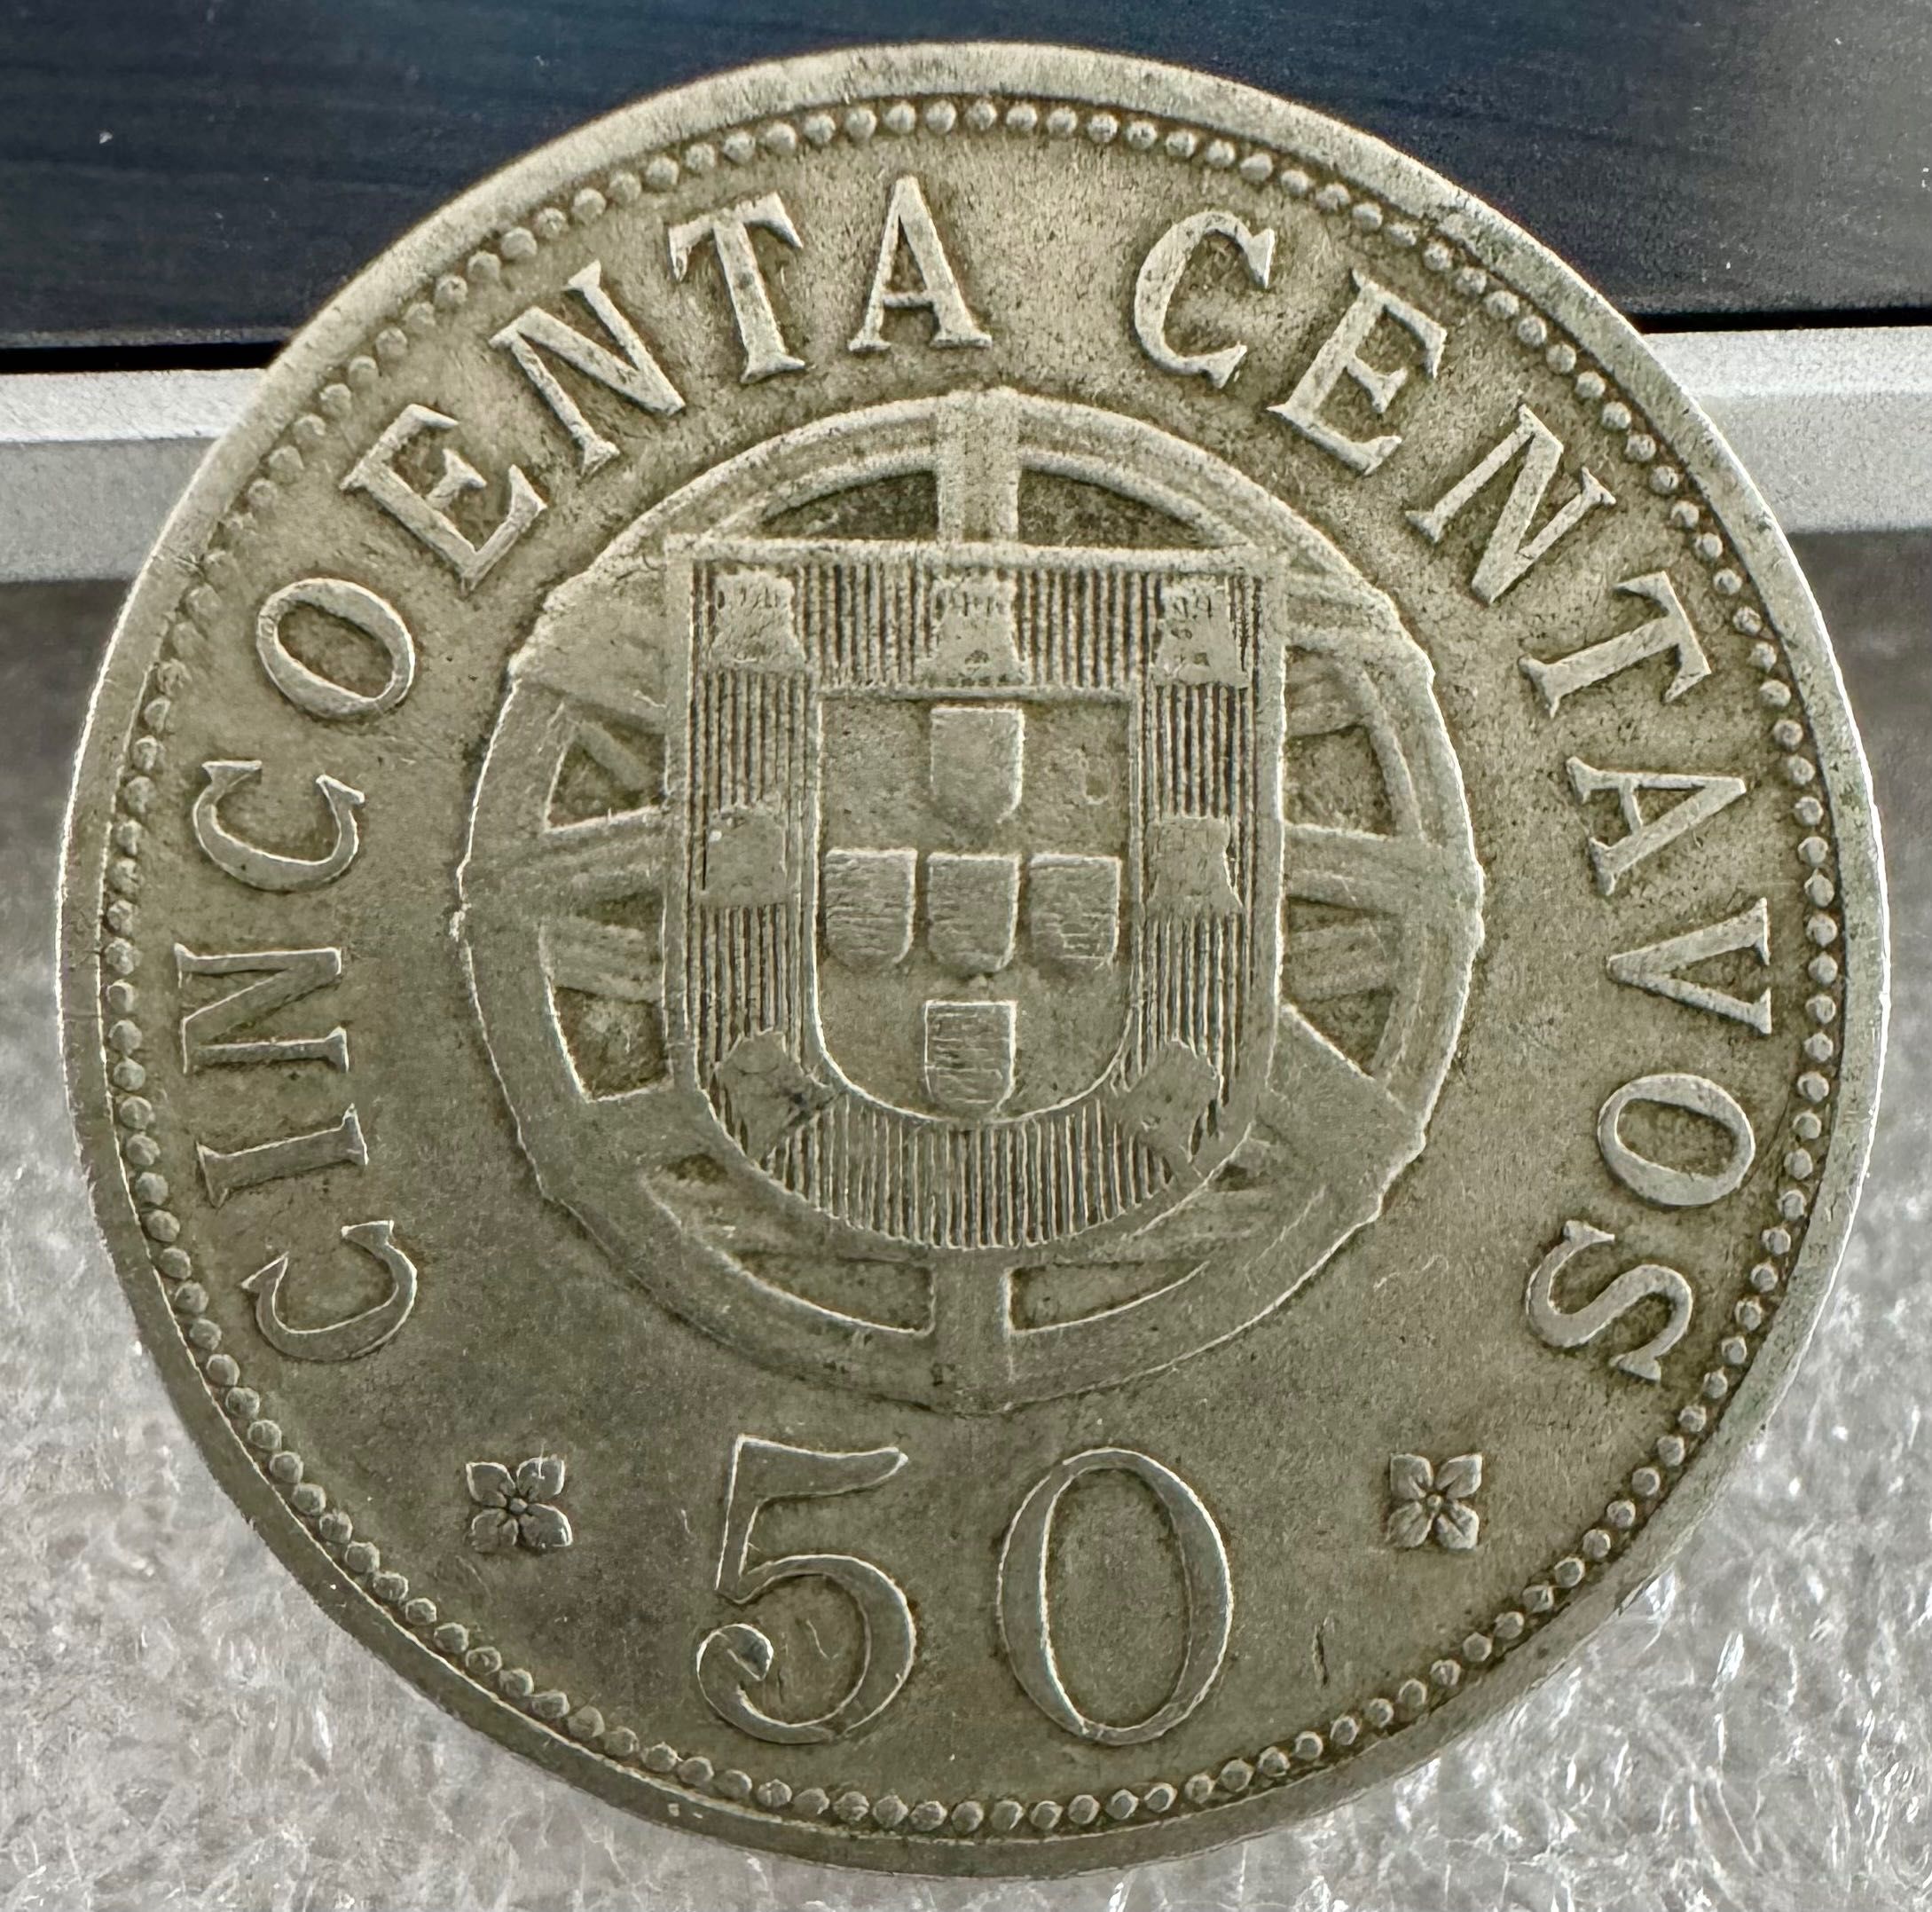 50 Centavos 1927